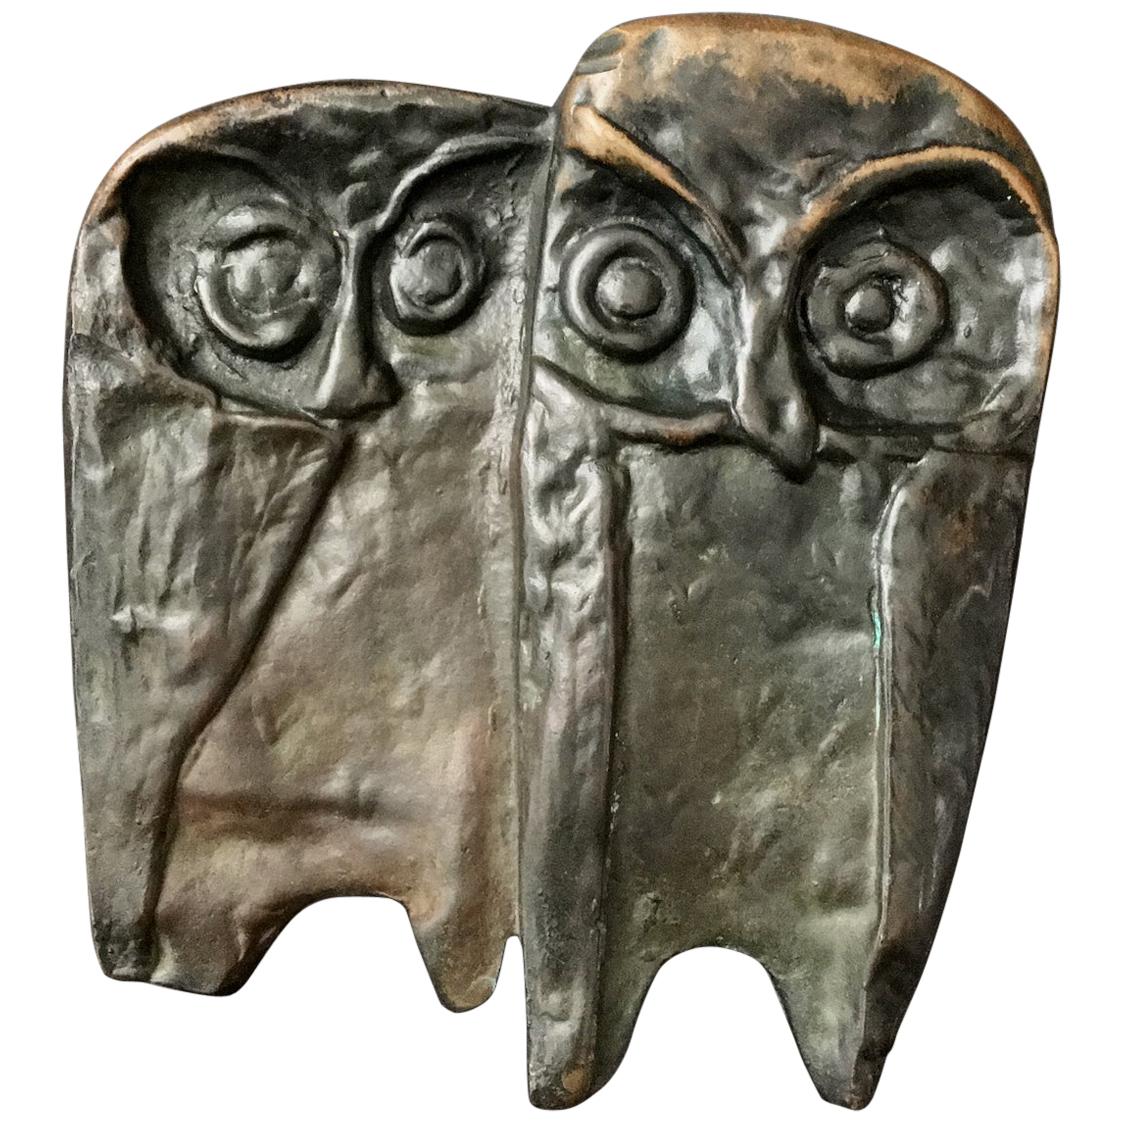 Bronze Push or Pull Door Handle with Owl Design, 20th Century, European